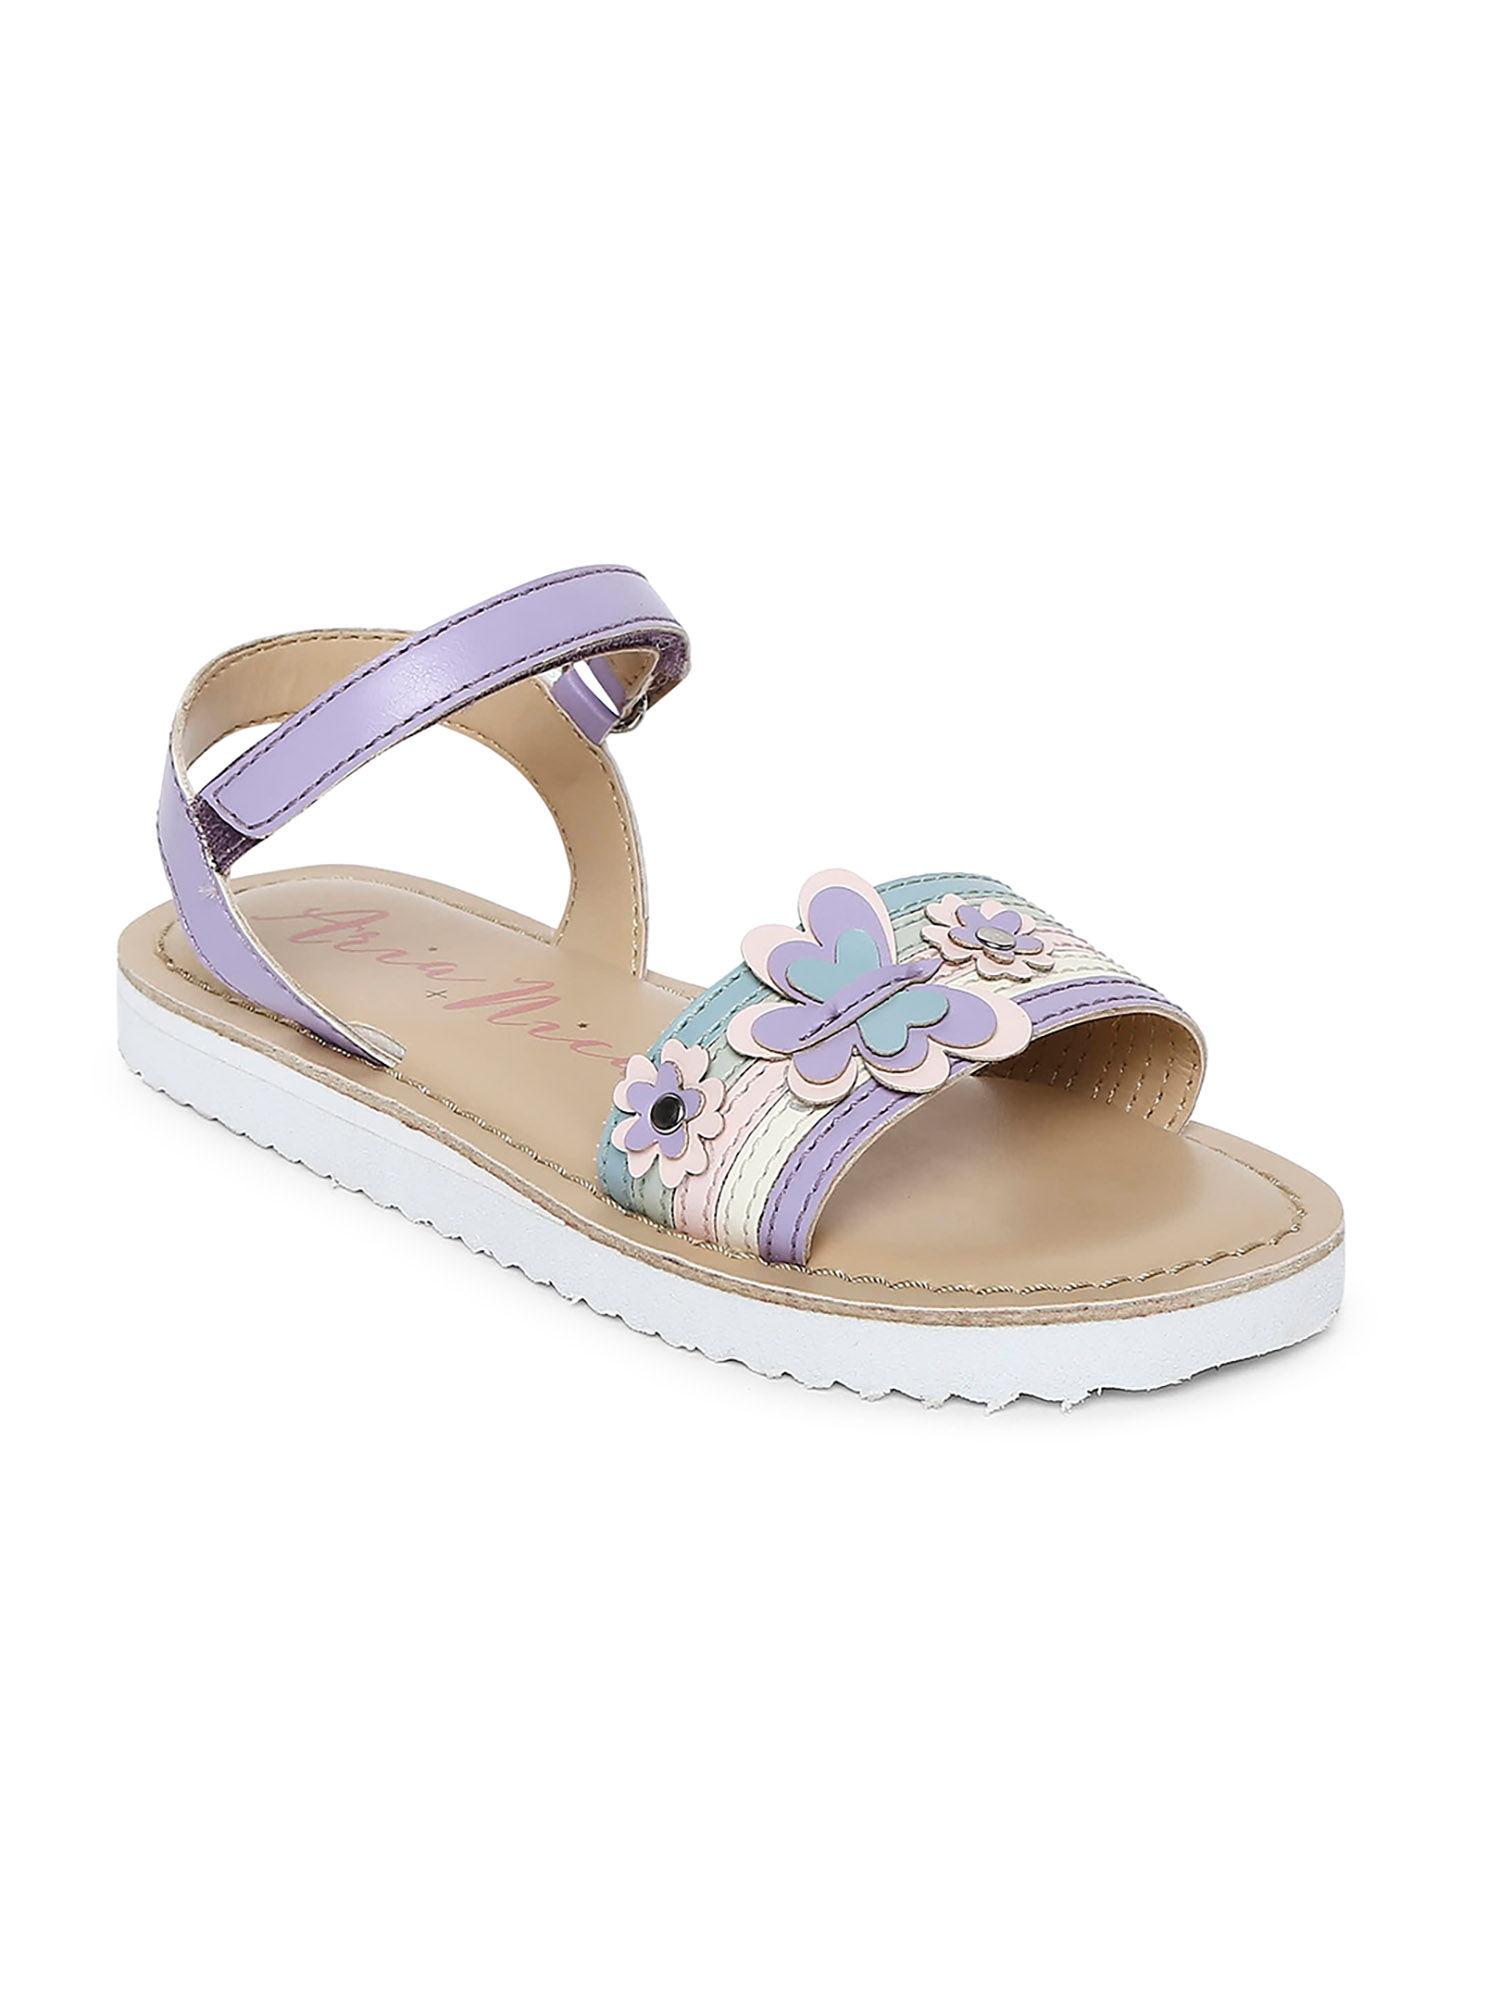 floral lavender round toe sandals